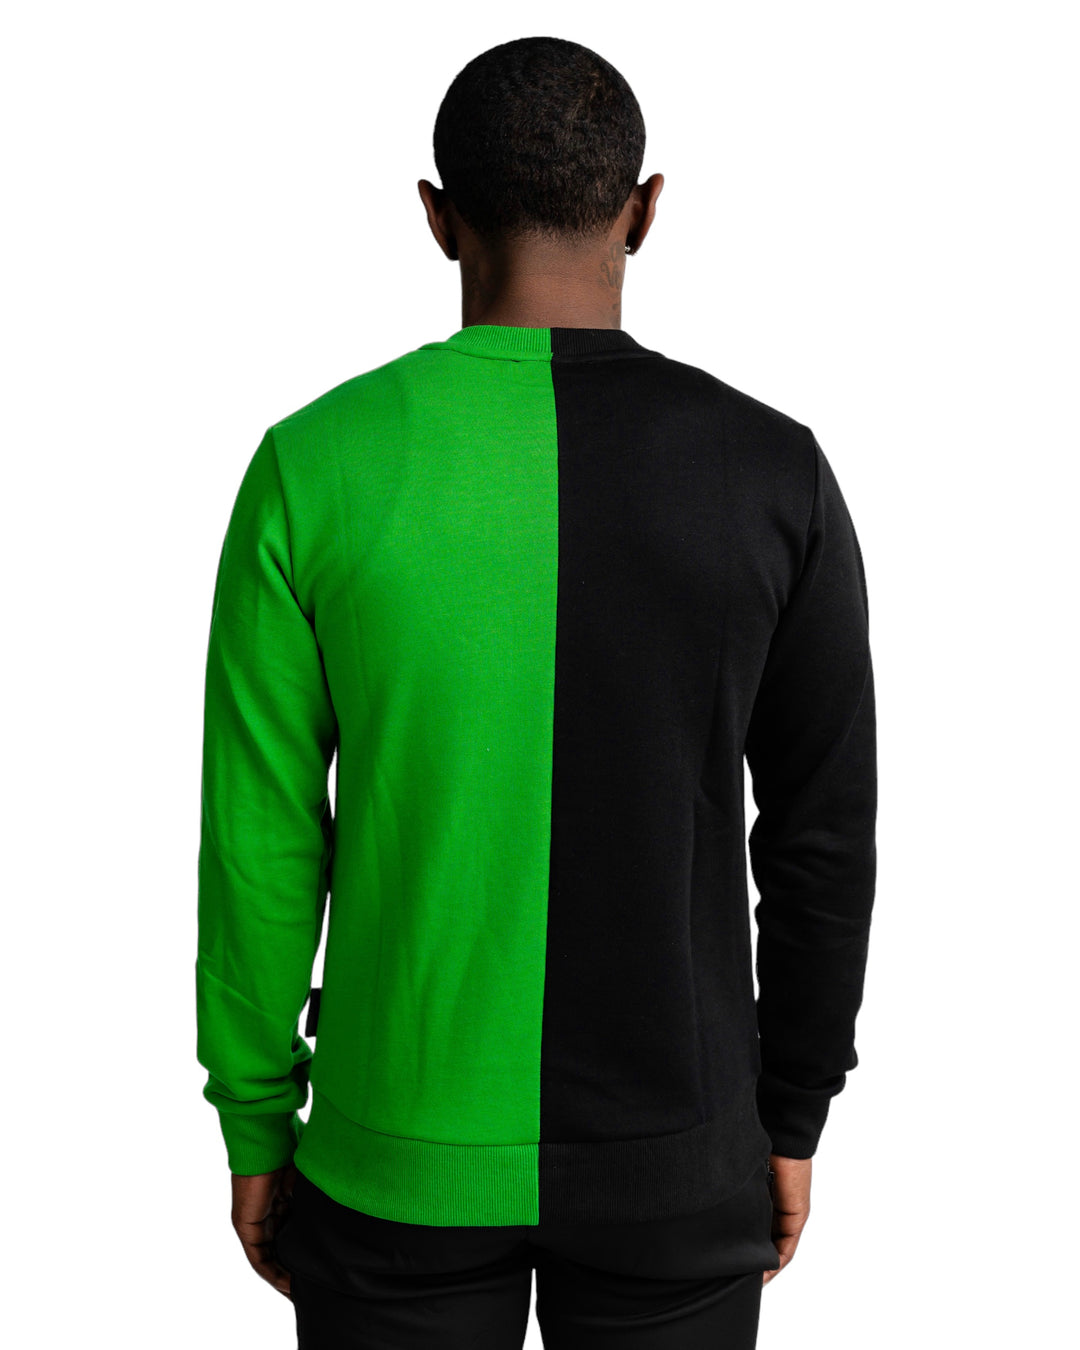 Split Sweater in Black/Green